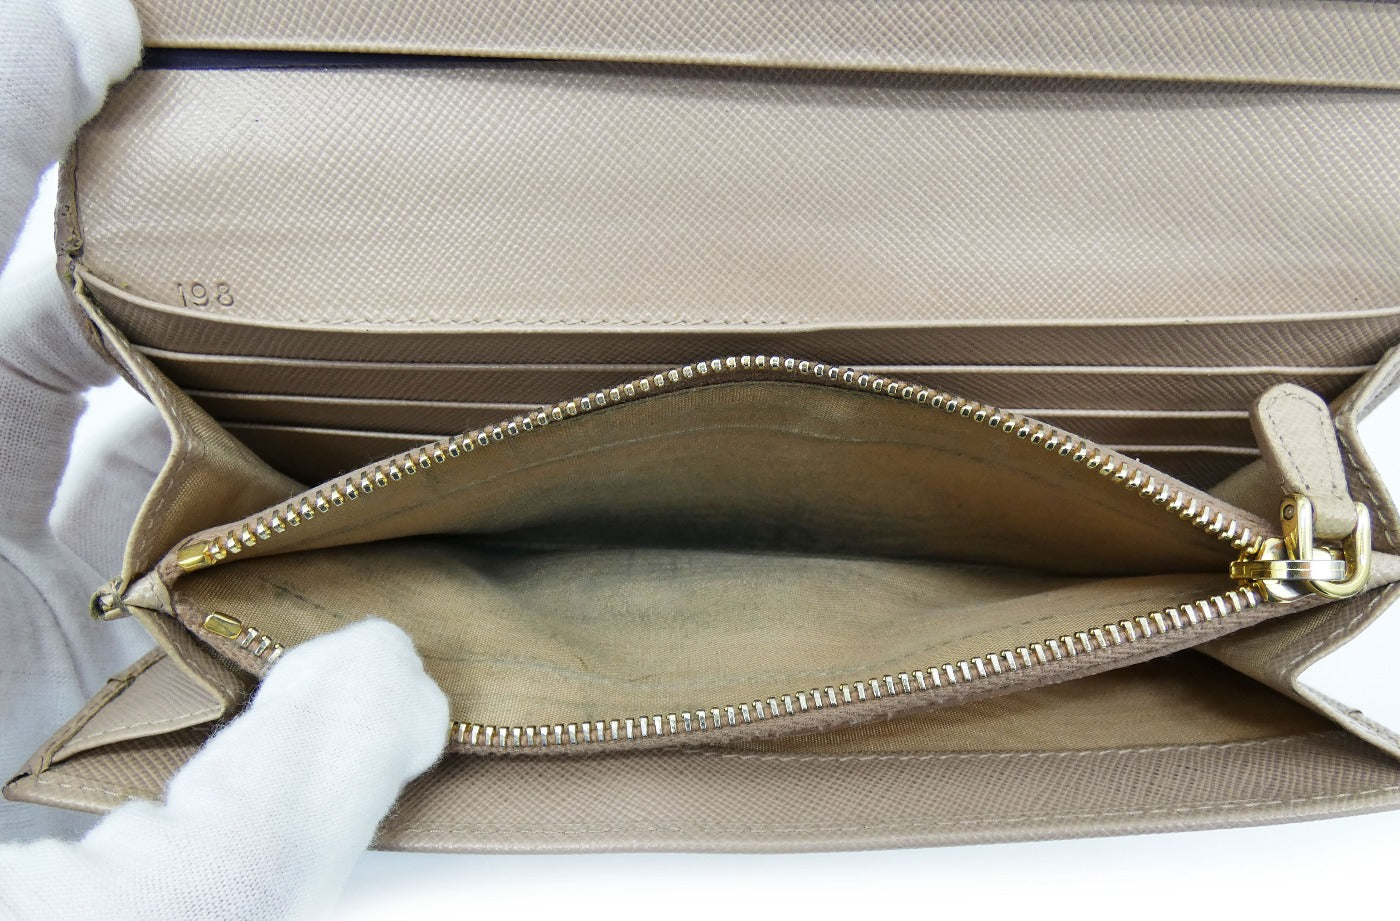 Prada Women's Large Leather Wallet - Brown